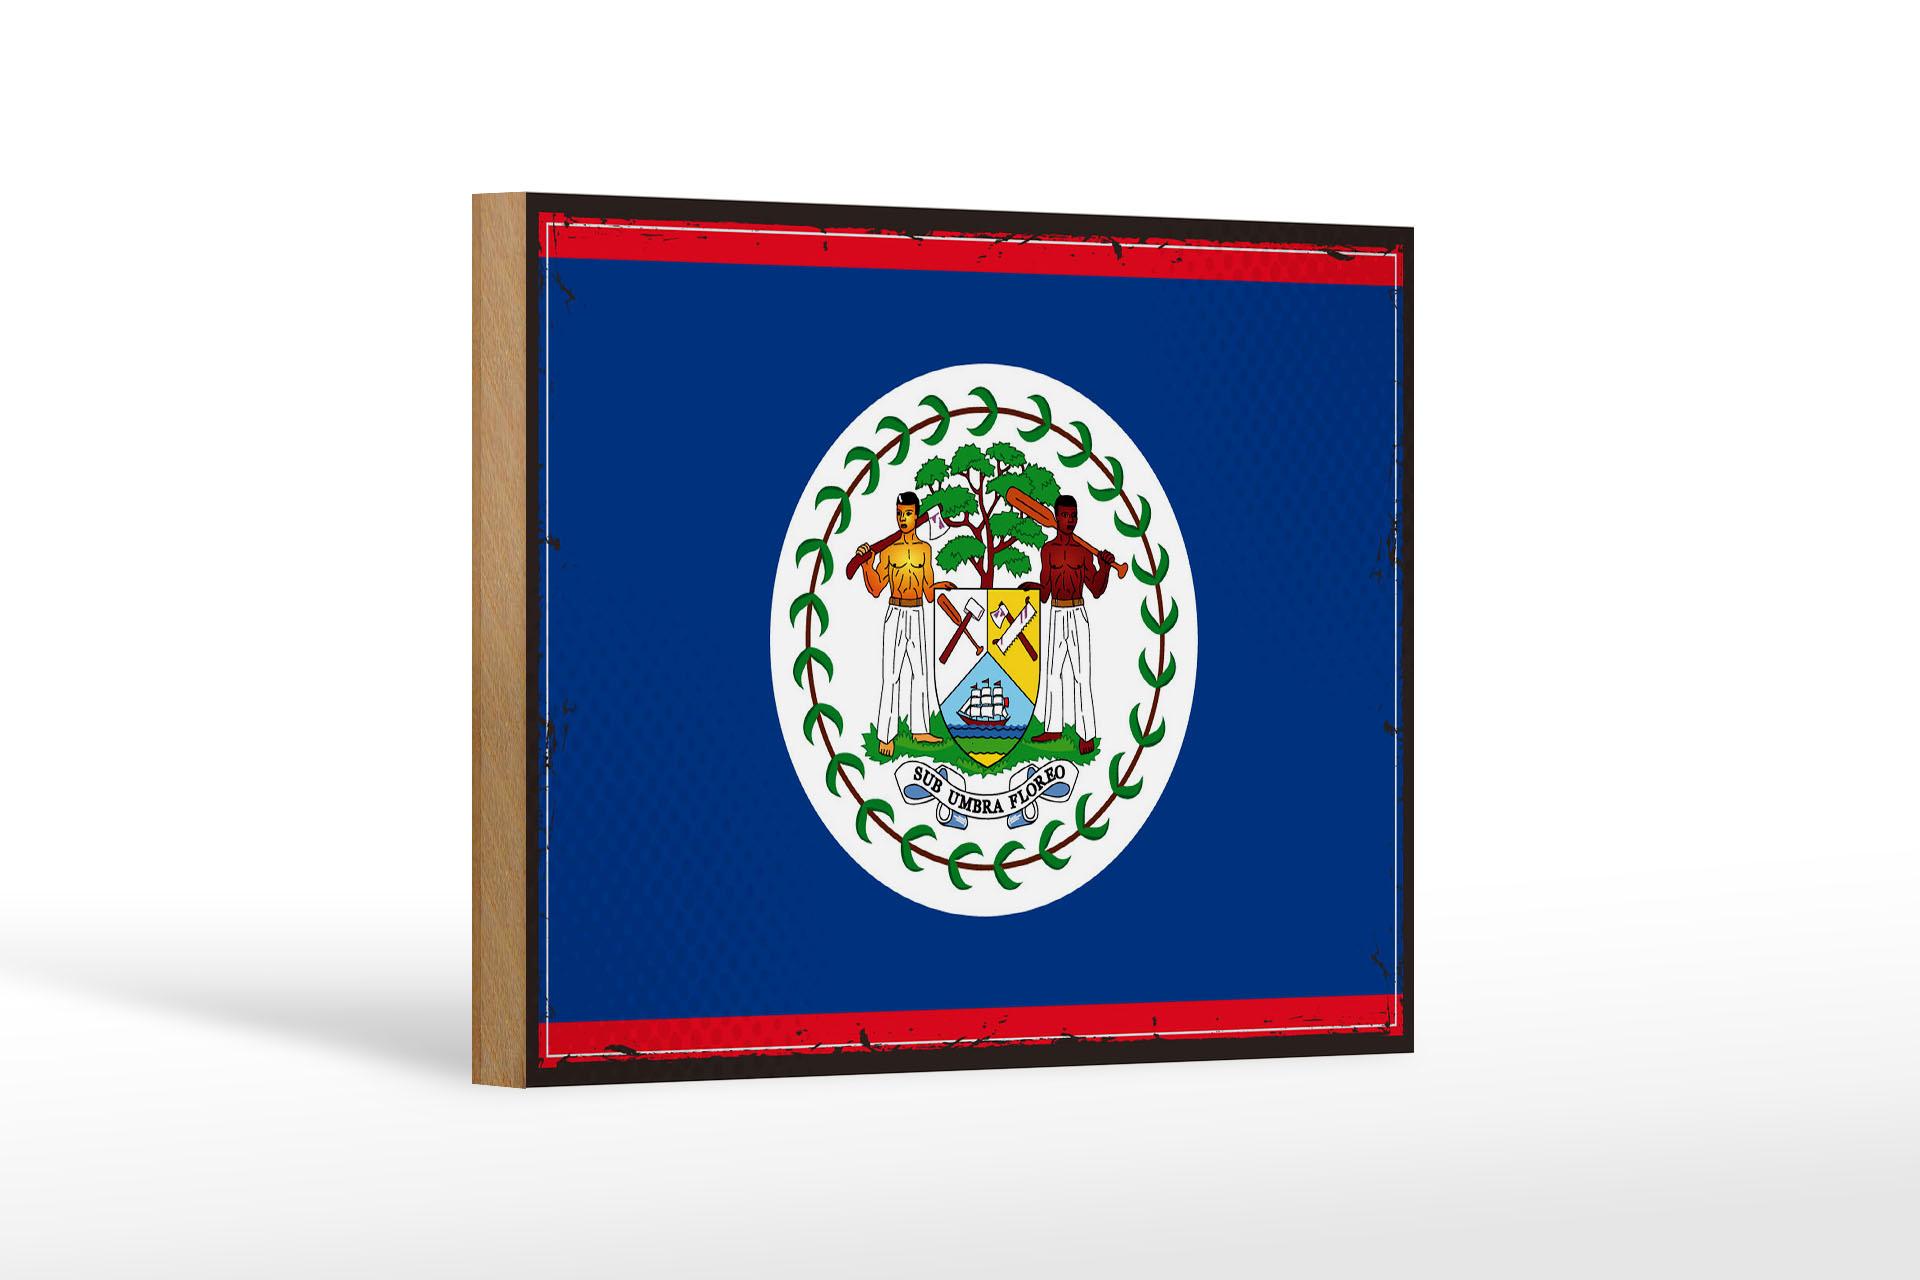 Holzschild Flagge Belizes 18x12 cm Retro Flag of Belize Deko Schild